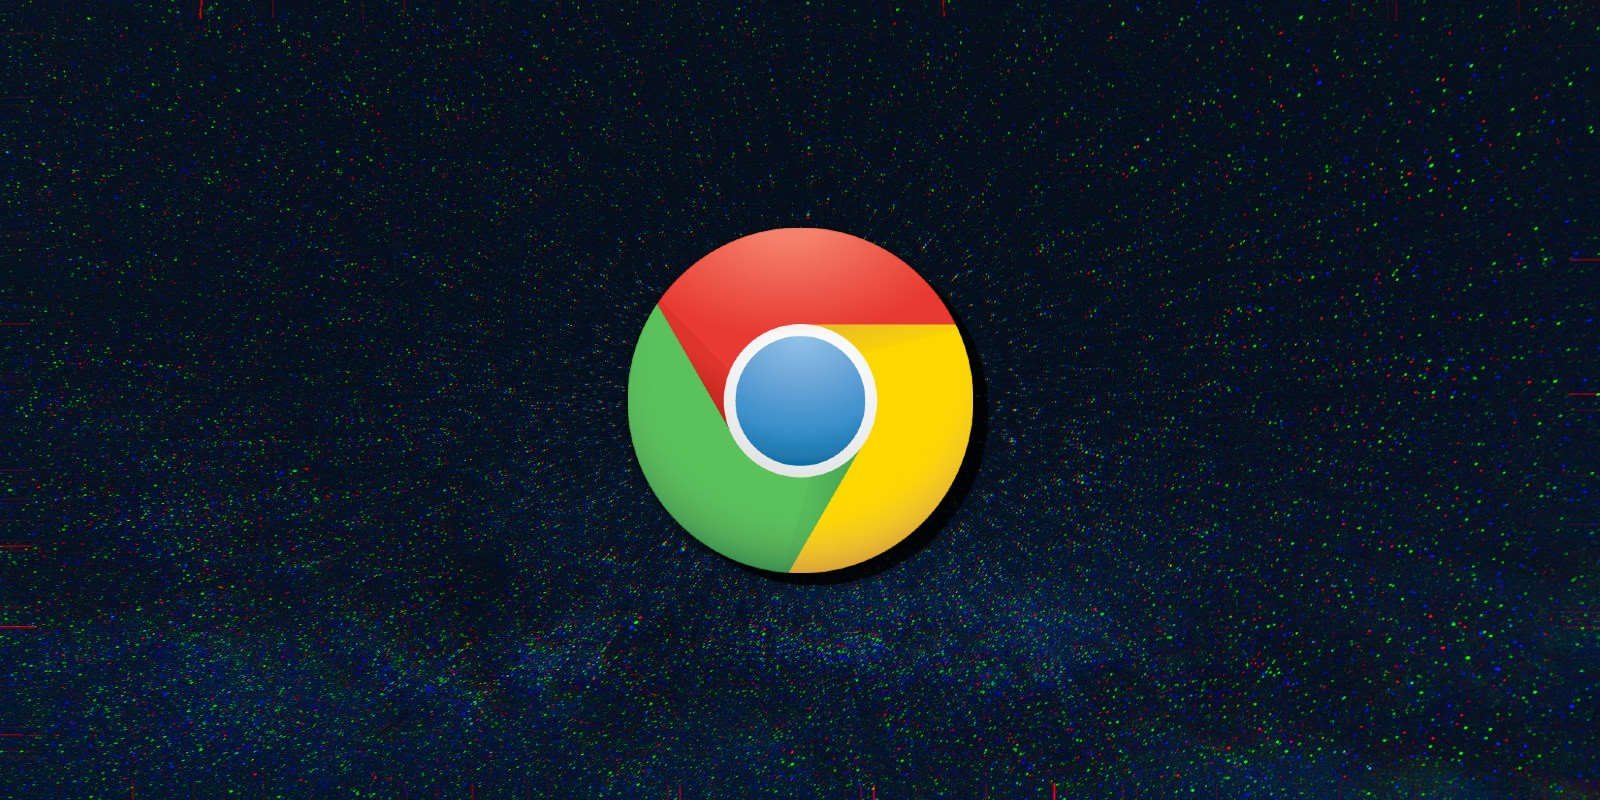 Second Google Chrome Zero Day Exploit Dropped This Week